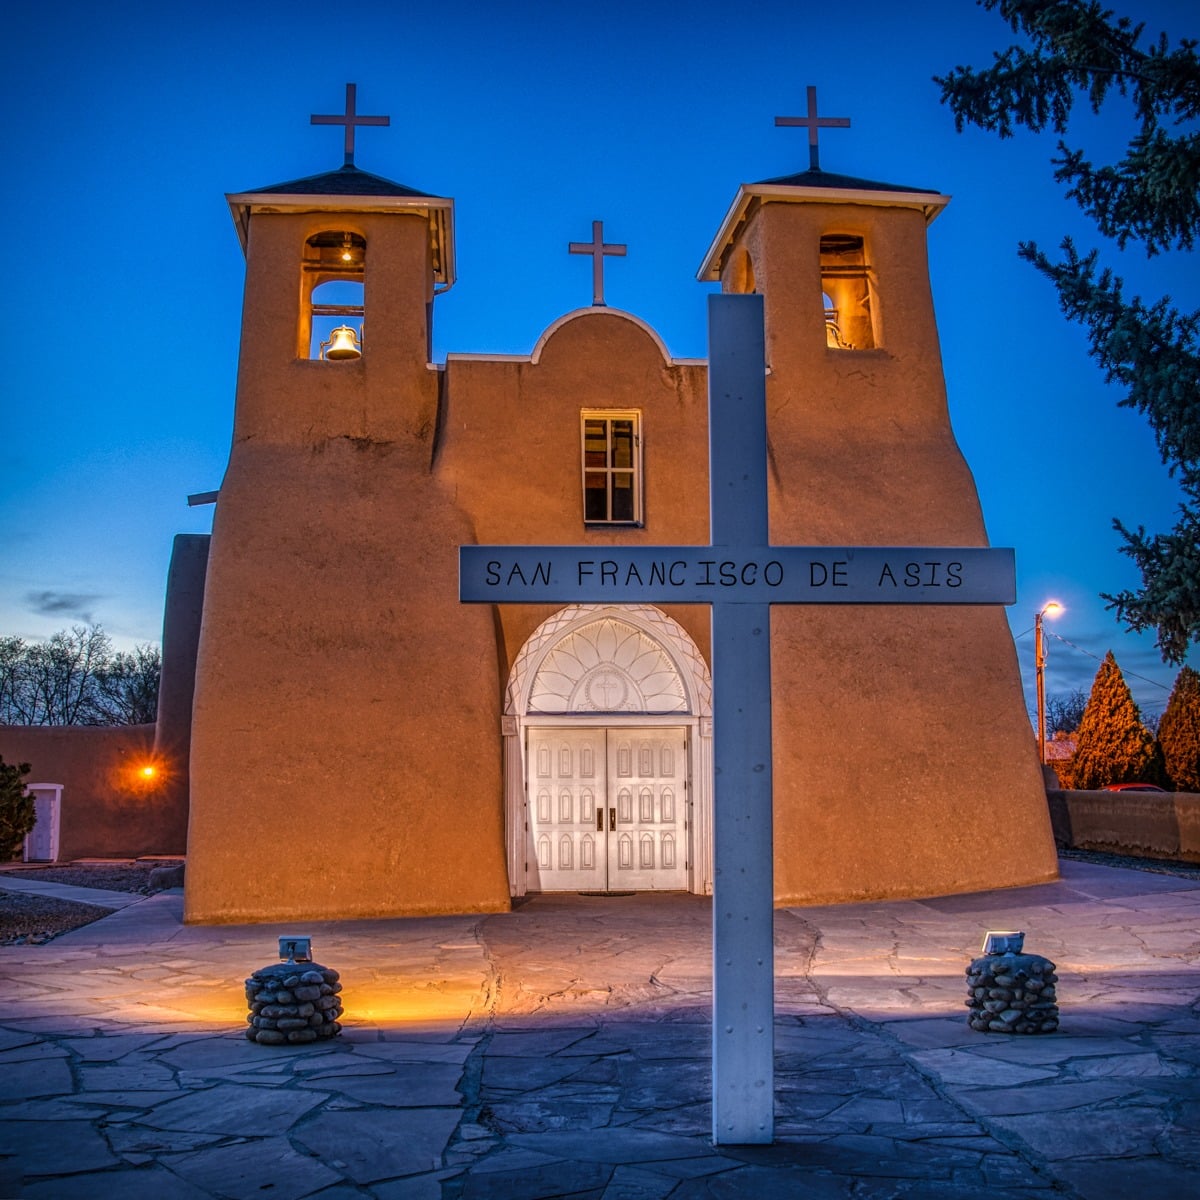 An evening view of theFrancisco de Asis Mission Church in Ranchos de Taos, New Mexico.